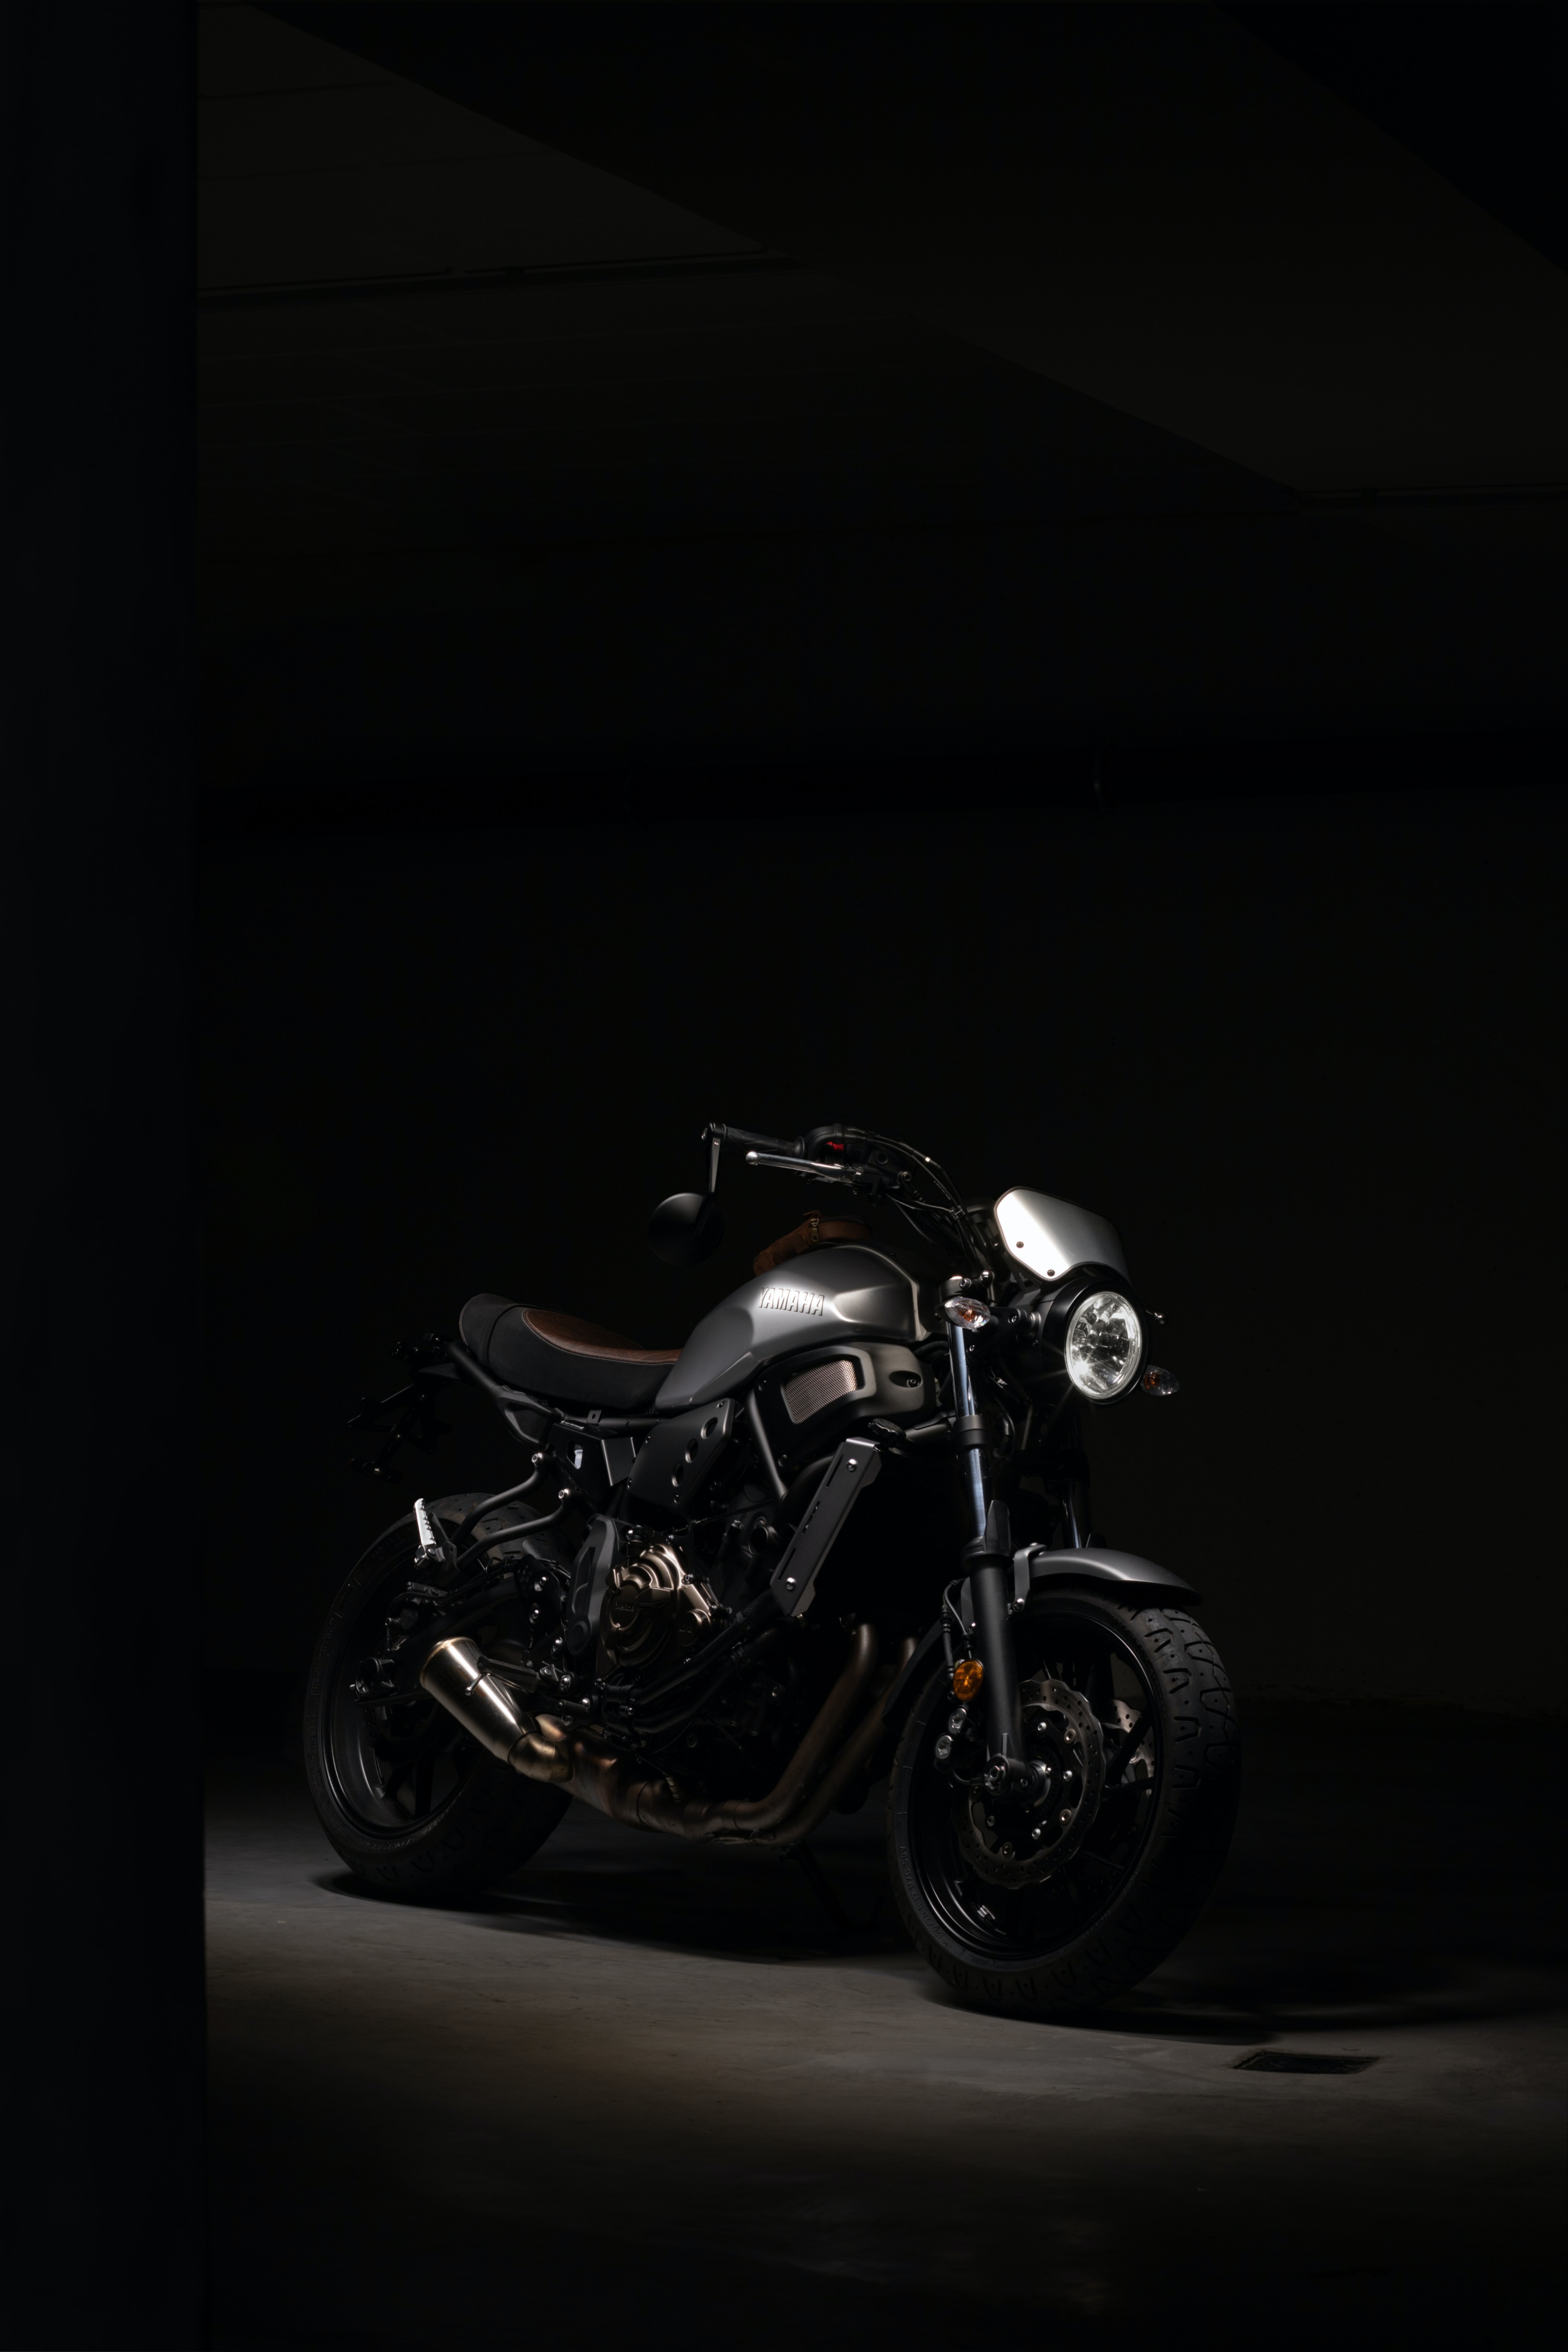 motorcycle, headlight, motorcycles, dark lock screen backgrounds